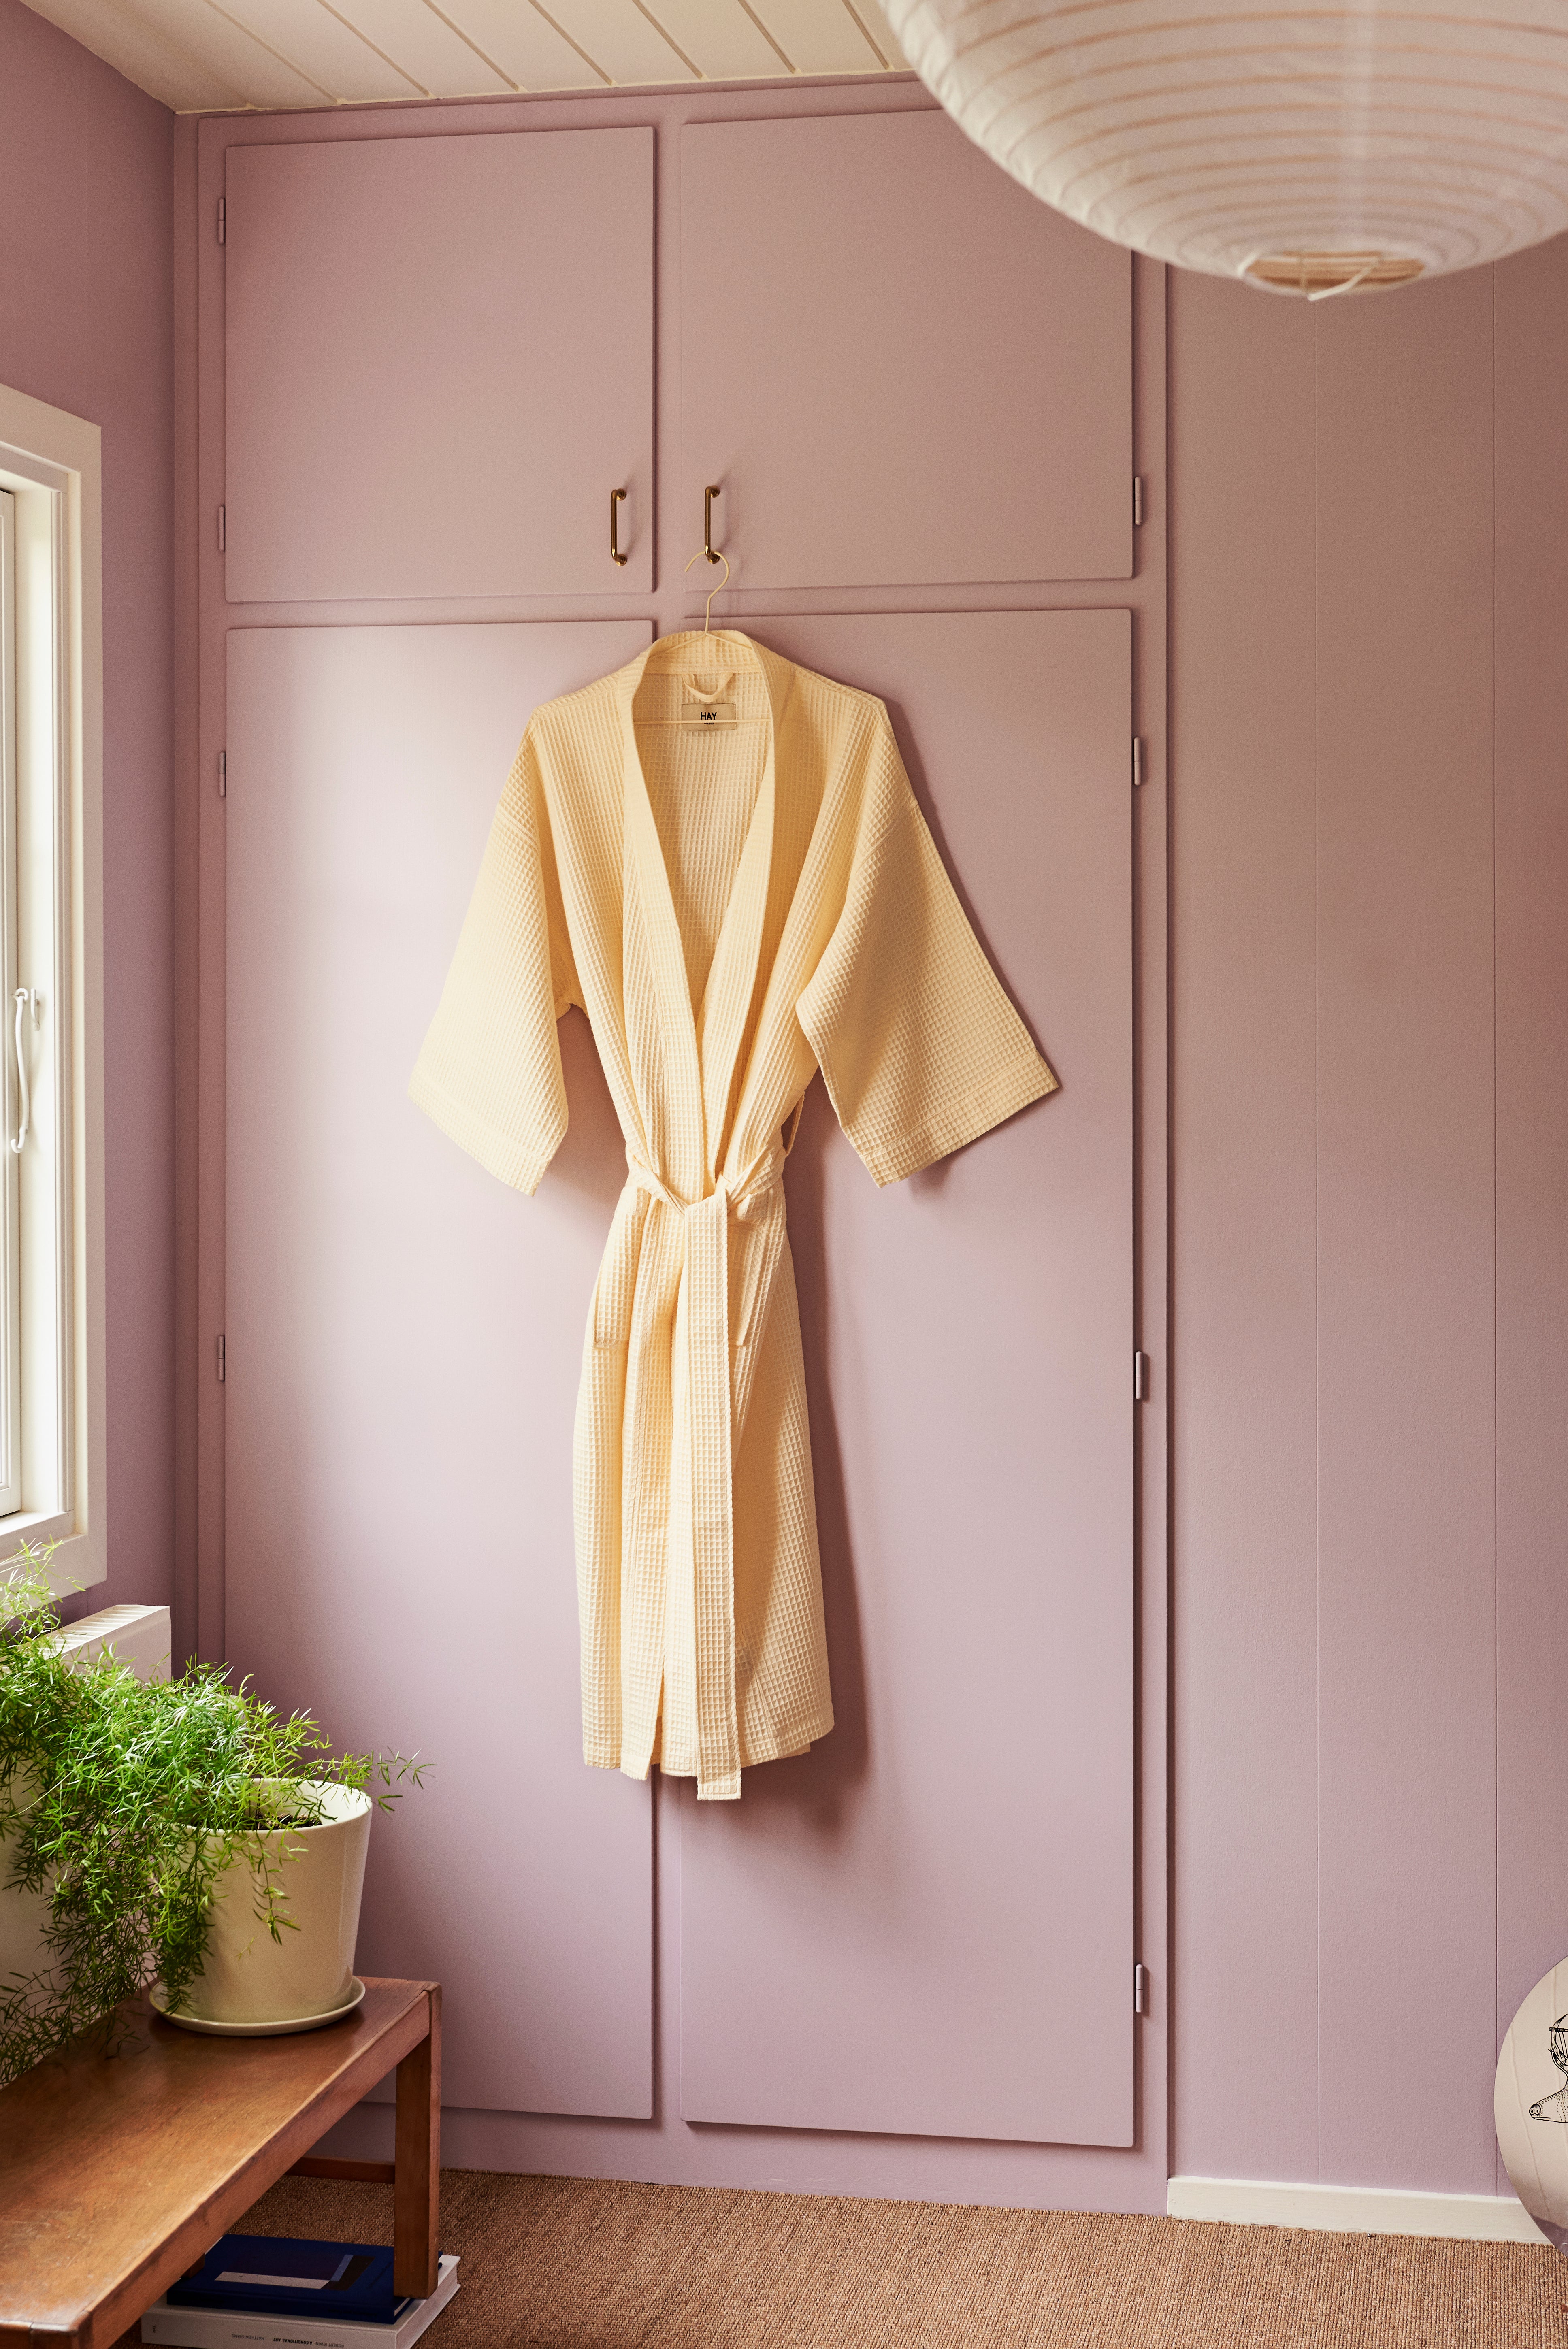 pink closet with yellow bathrobe hanging